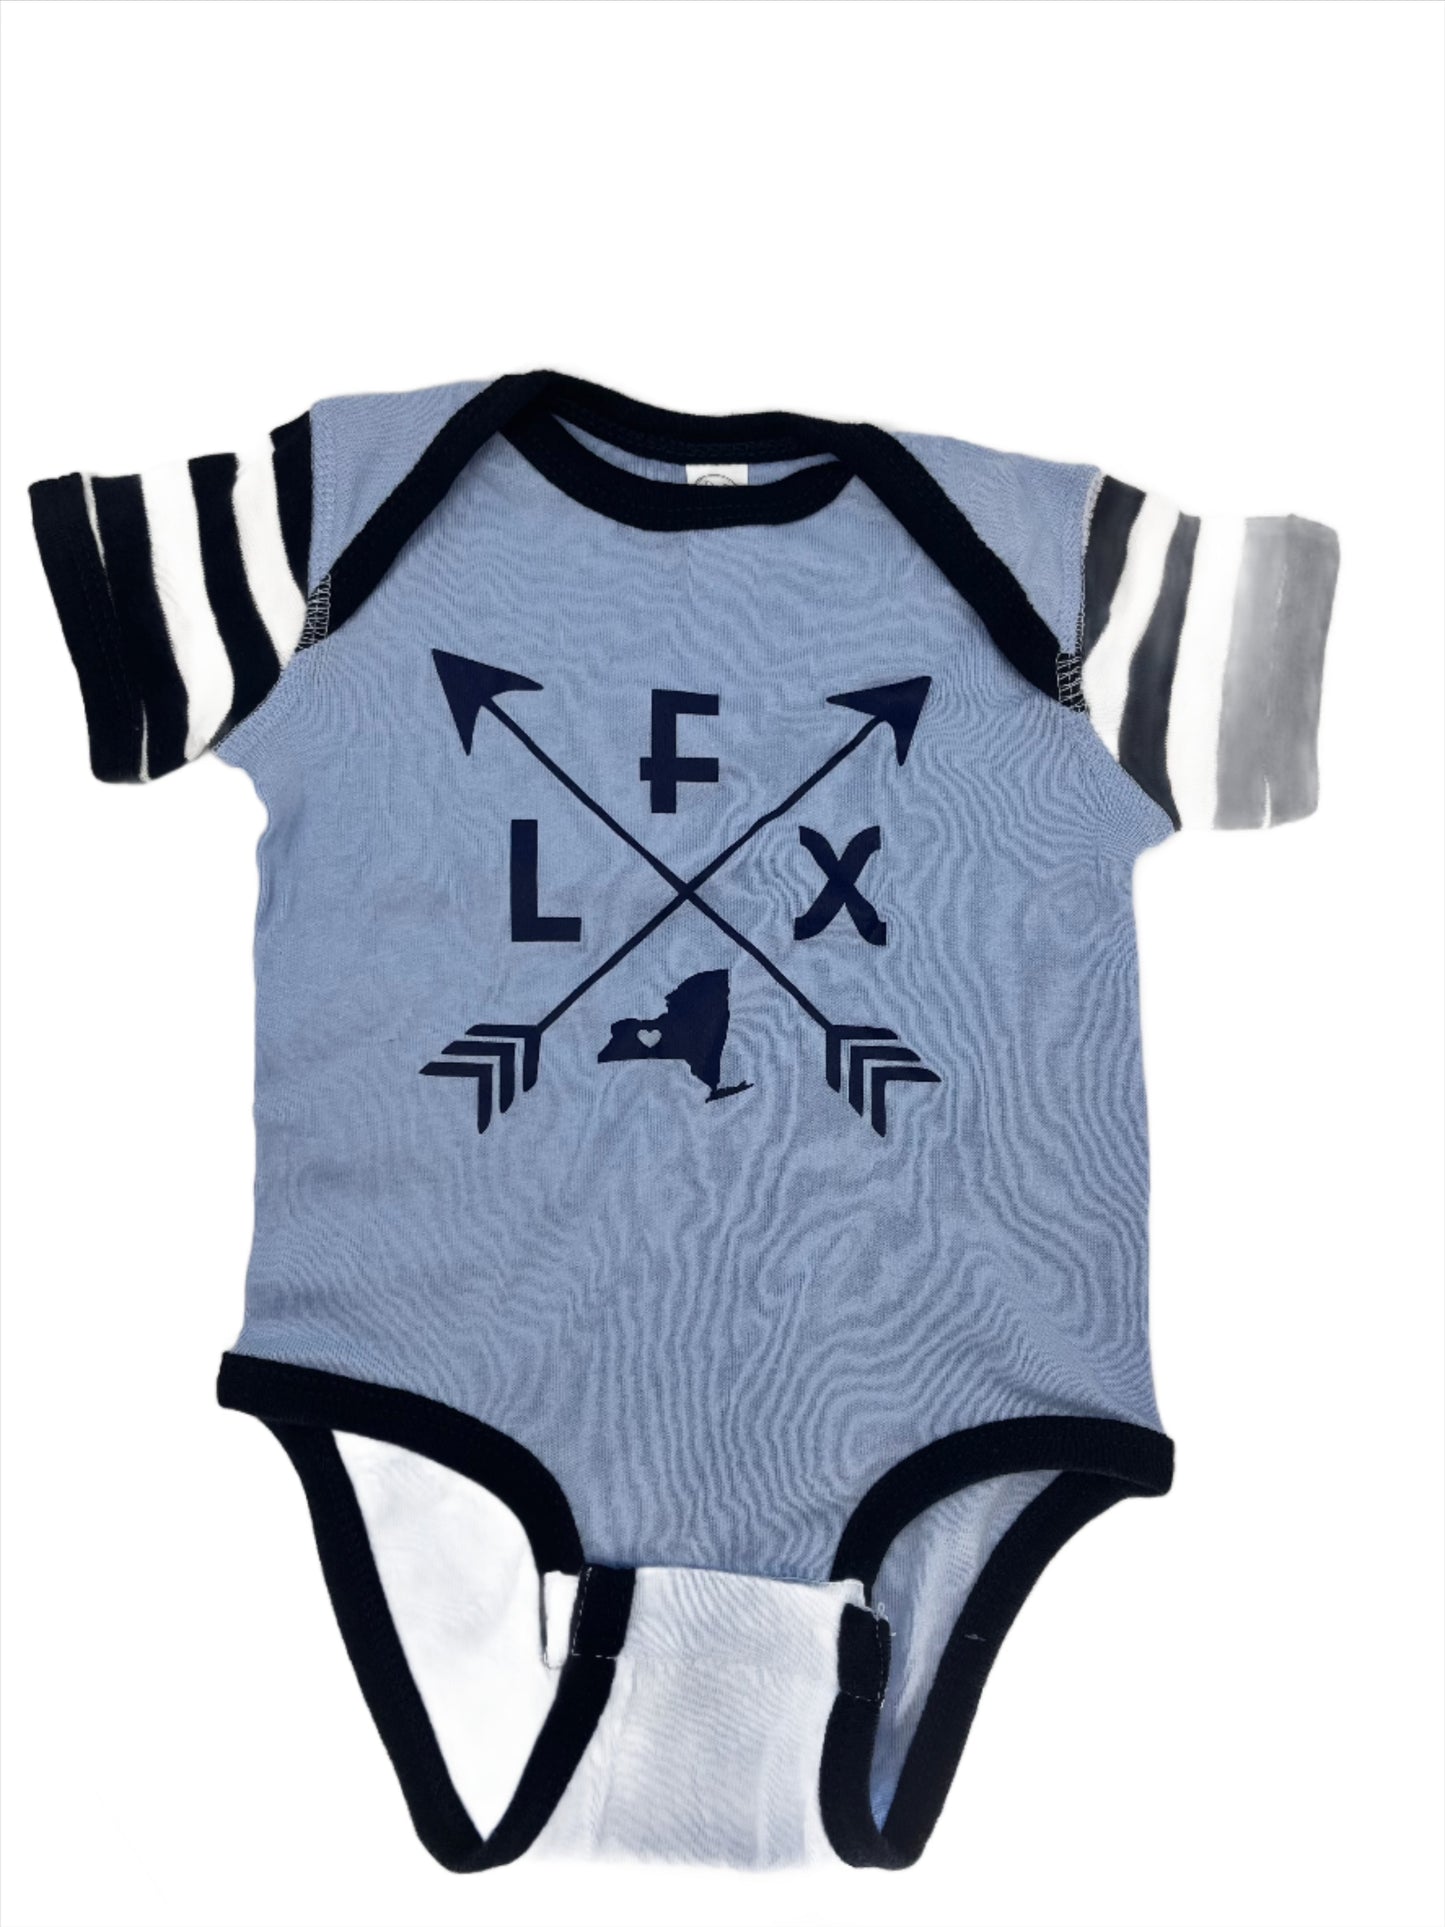 FLX baby body suit